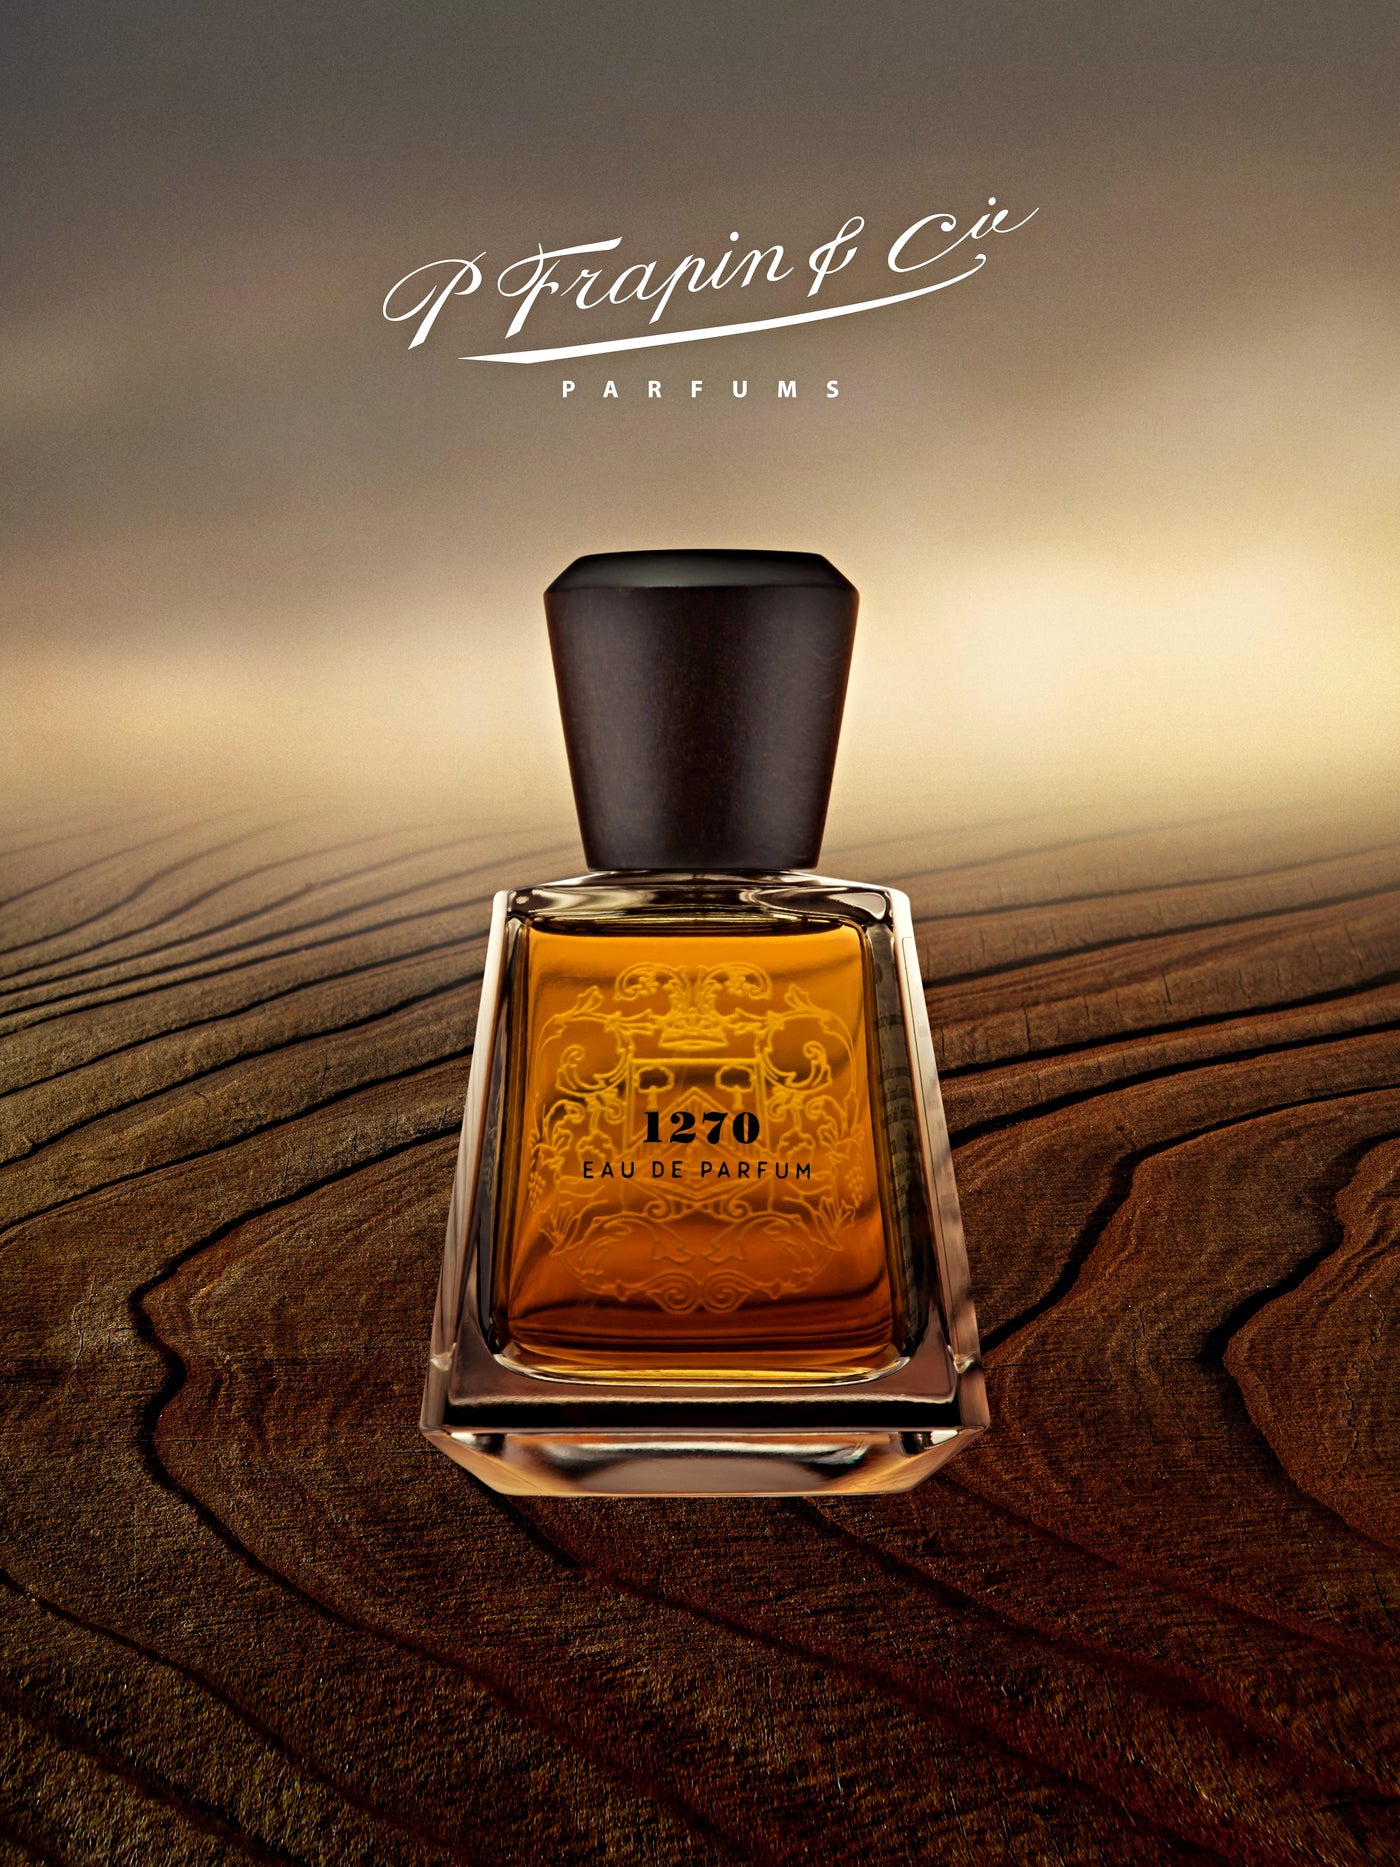 1270 - P.Frapin & Cie - Eau de Parfum 15ml- Tuxedo.no - Nettbutikk - On Demand Barbers Oslo Norway